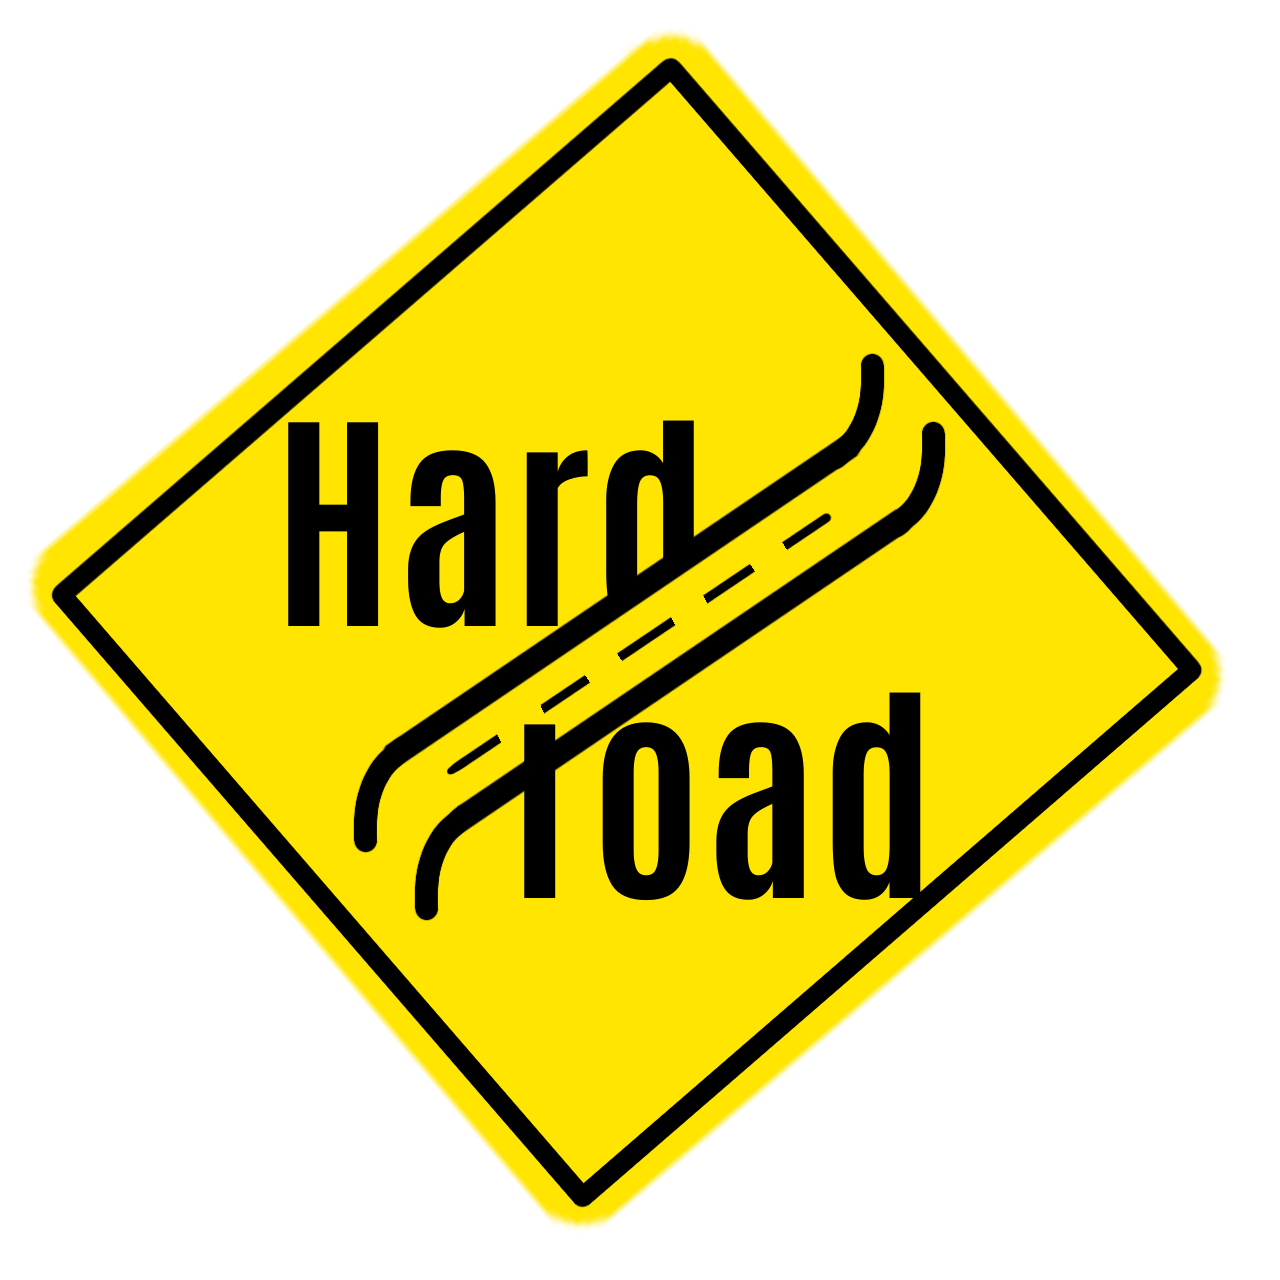 Hard road